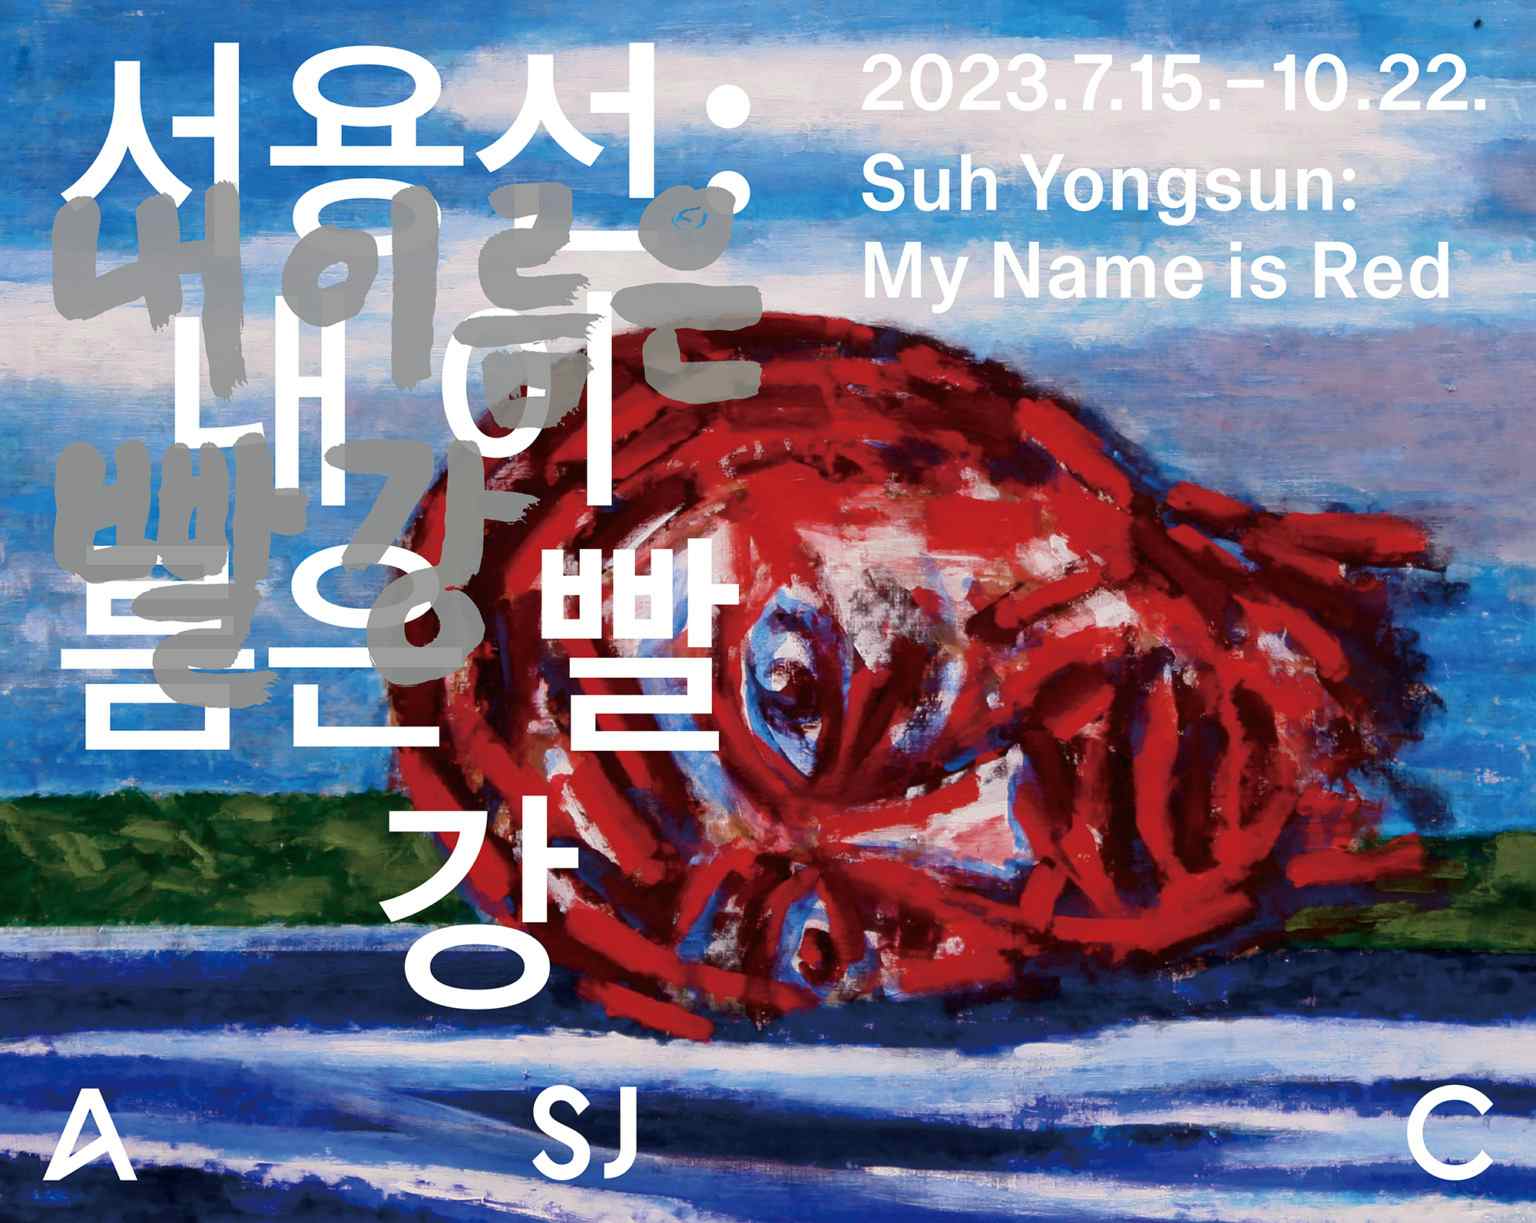 Suh Yongsun: My Name is Red